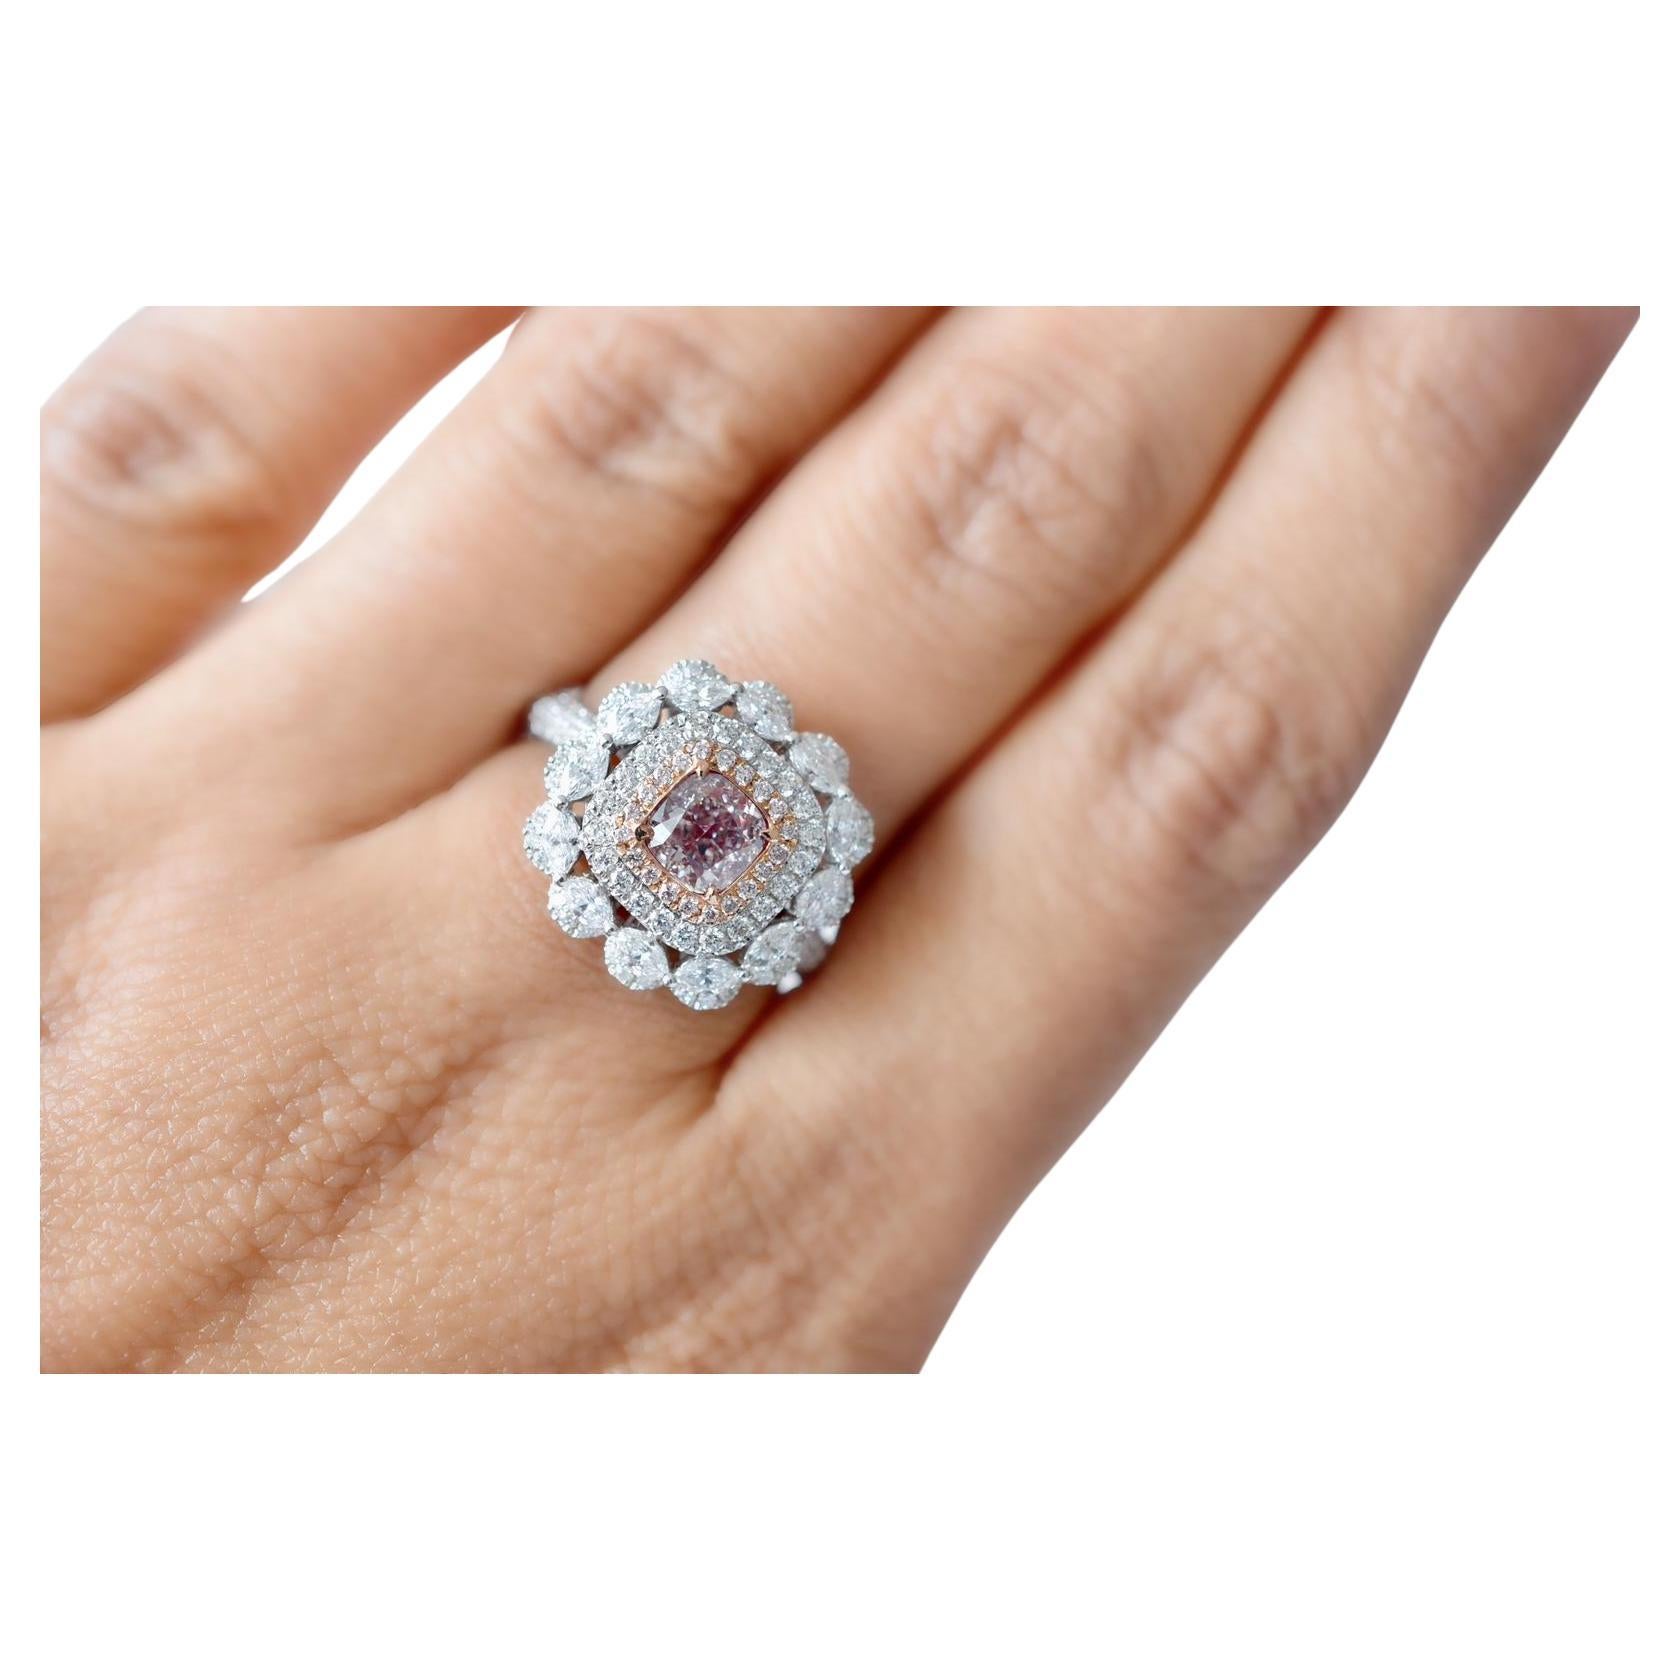 0.83 Carat Fancy Light Pinkish Brown Diamond Ring VS1 Clarity GIA Certified